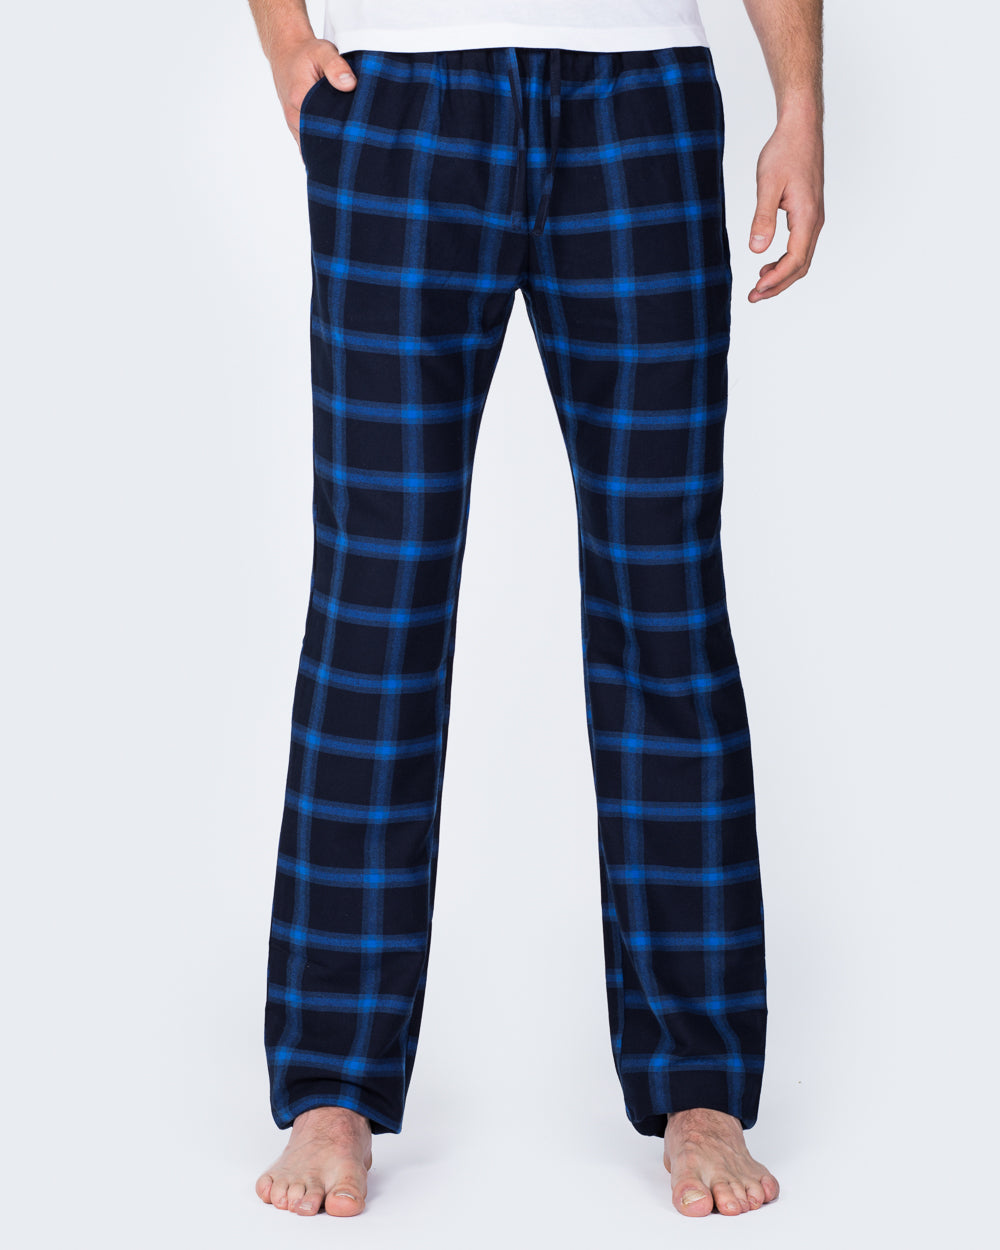 2t Tall Slim Fit Pyjama Bottoms (navy/blue)